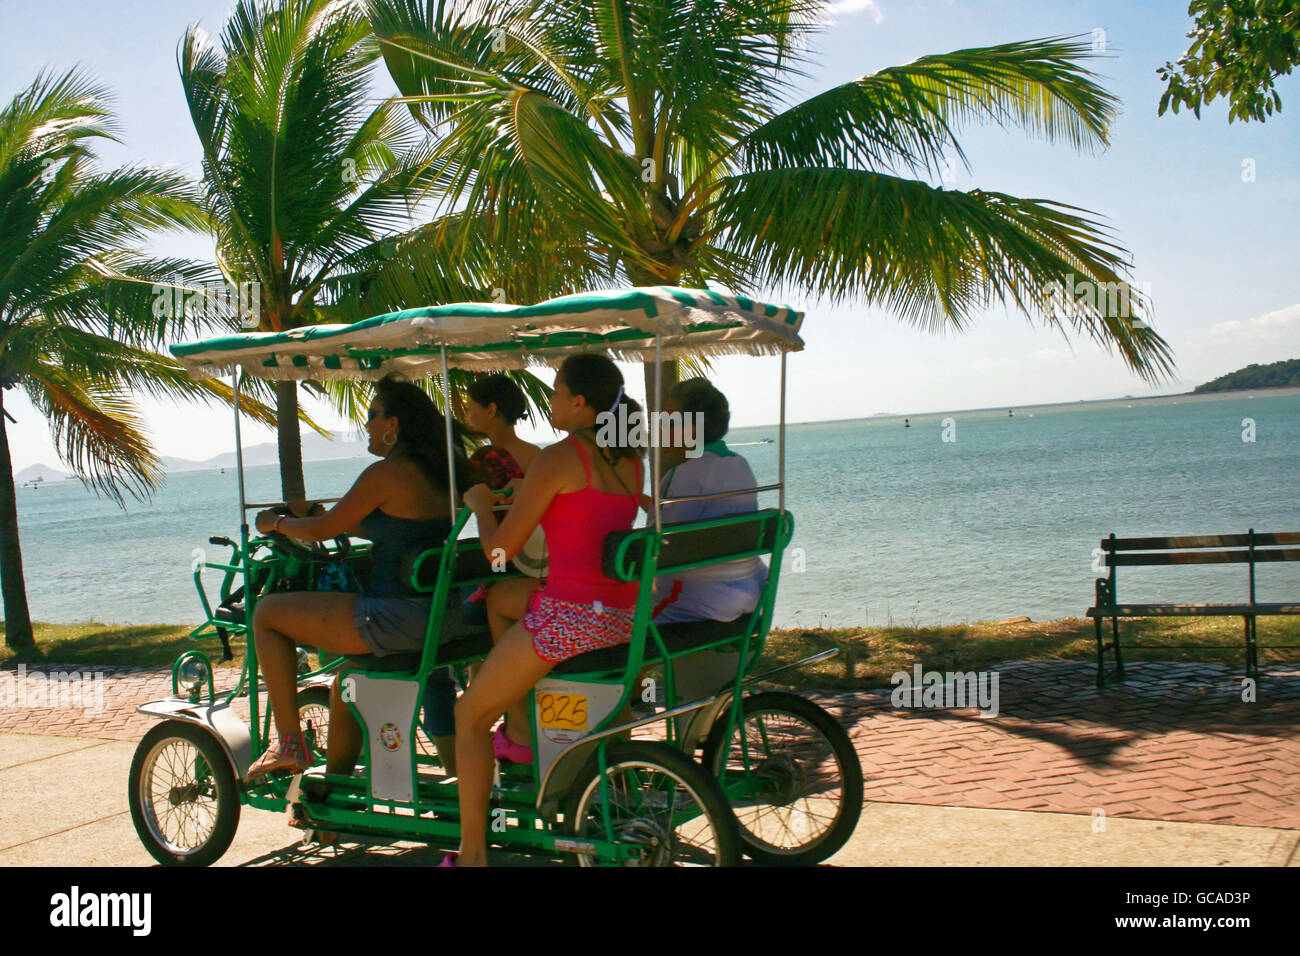 Four person bike trolley in Panama City, Panama. Stock Photo